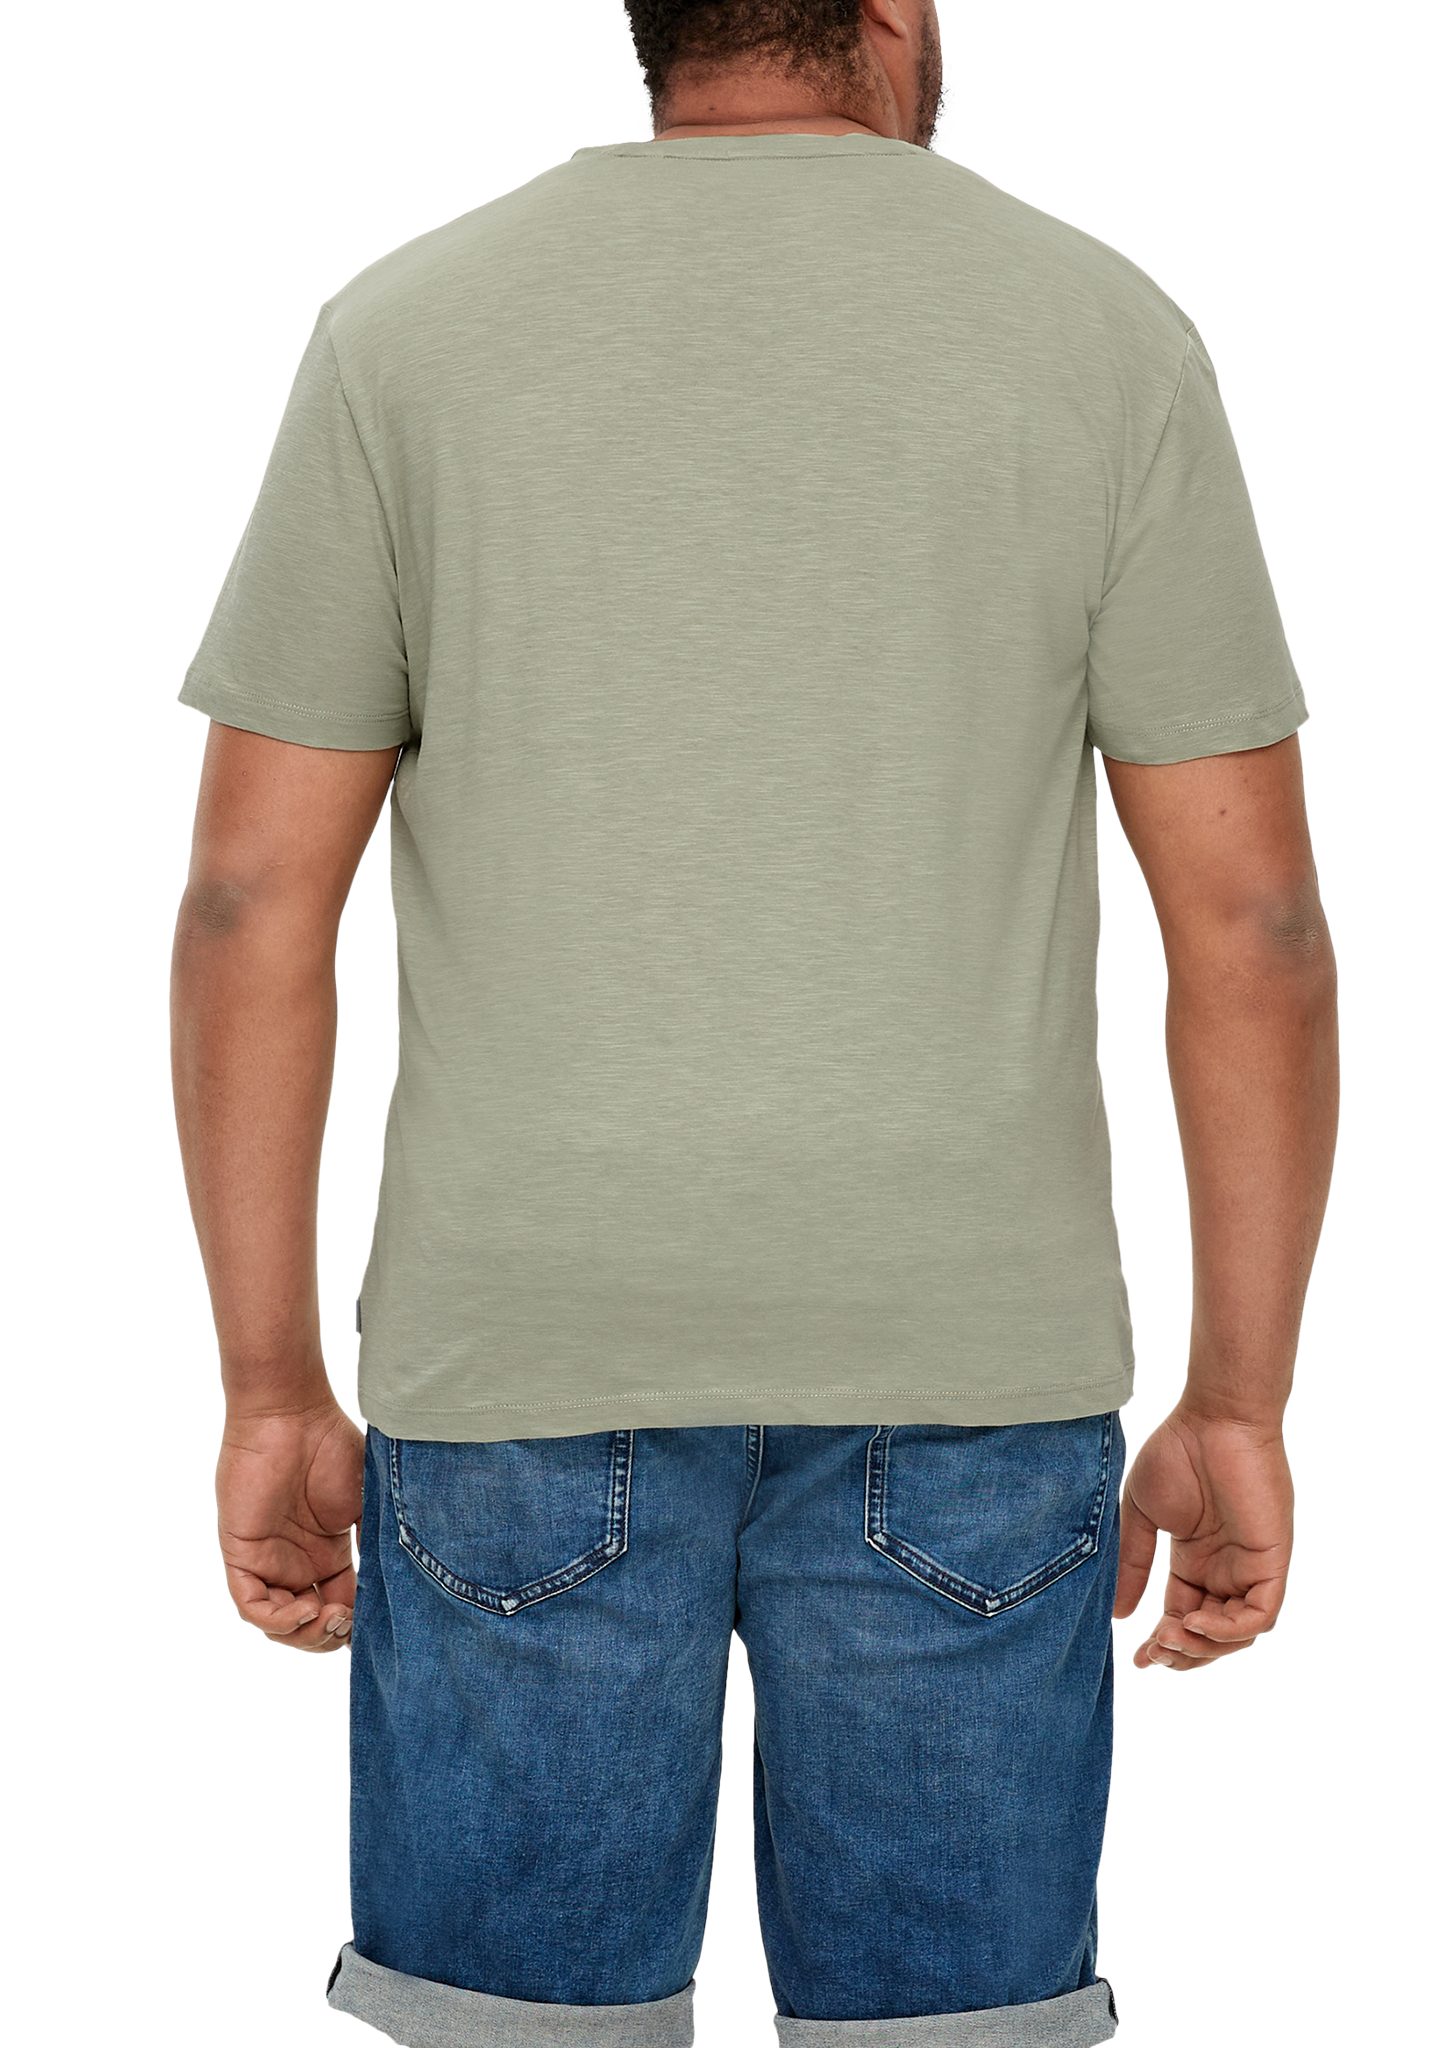 aus olivgrün Kurzarmshirt T-Shirt s.Oliver Baumwolle